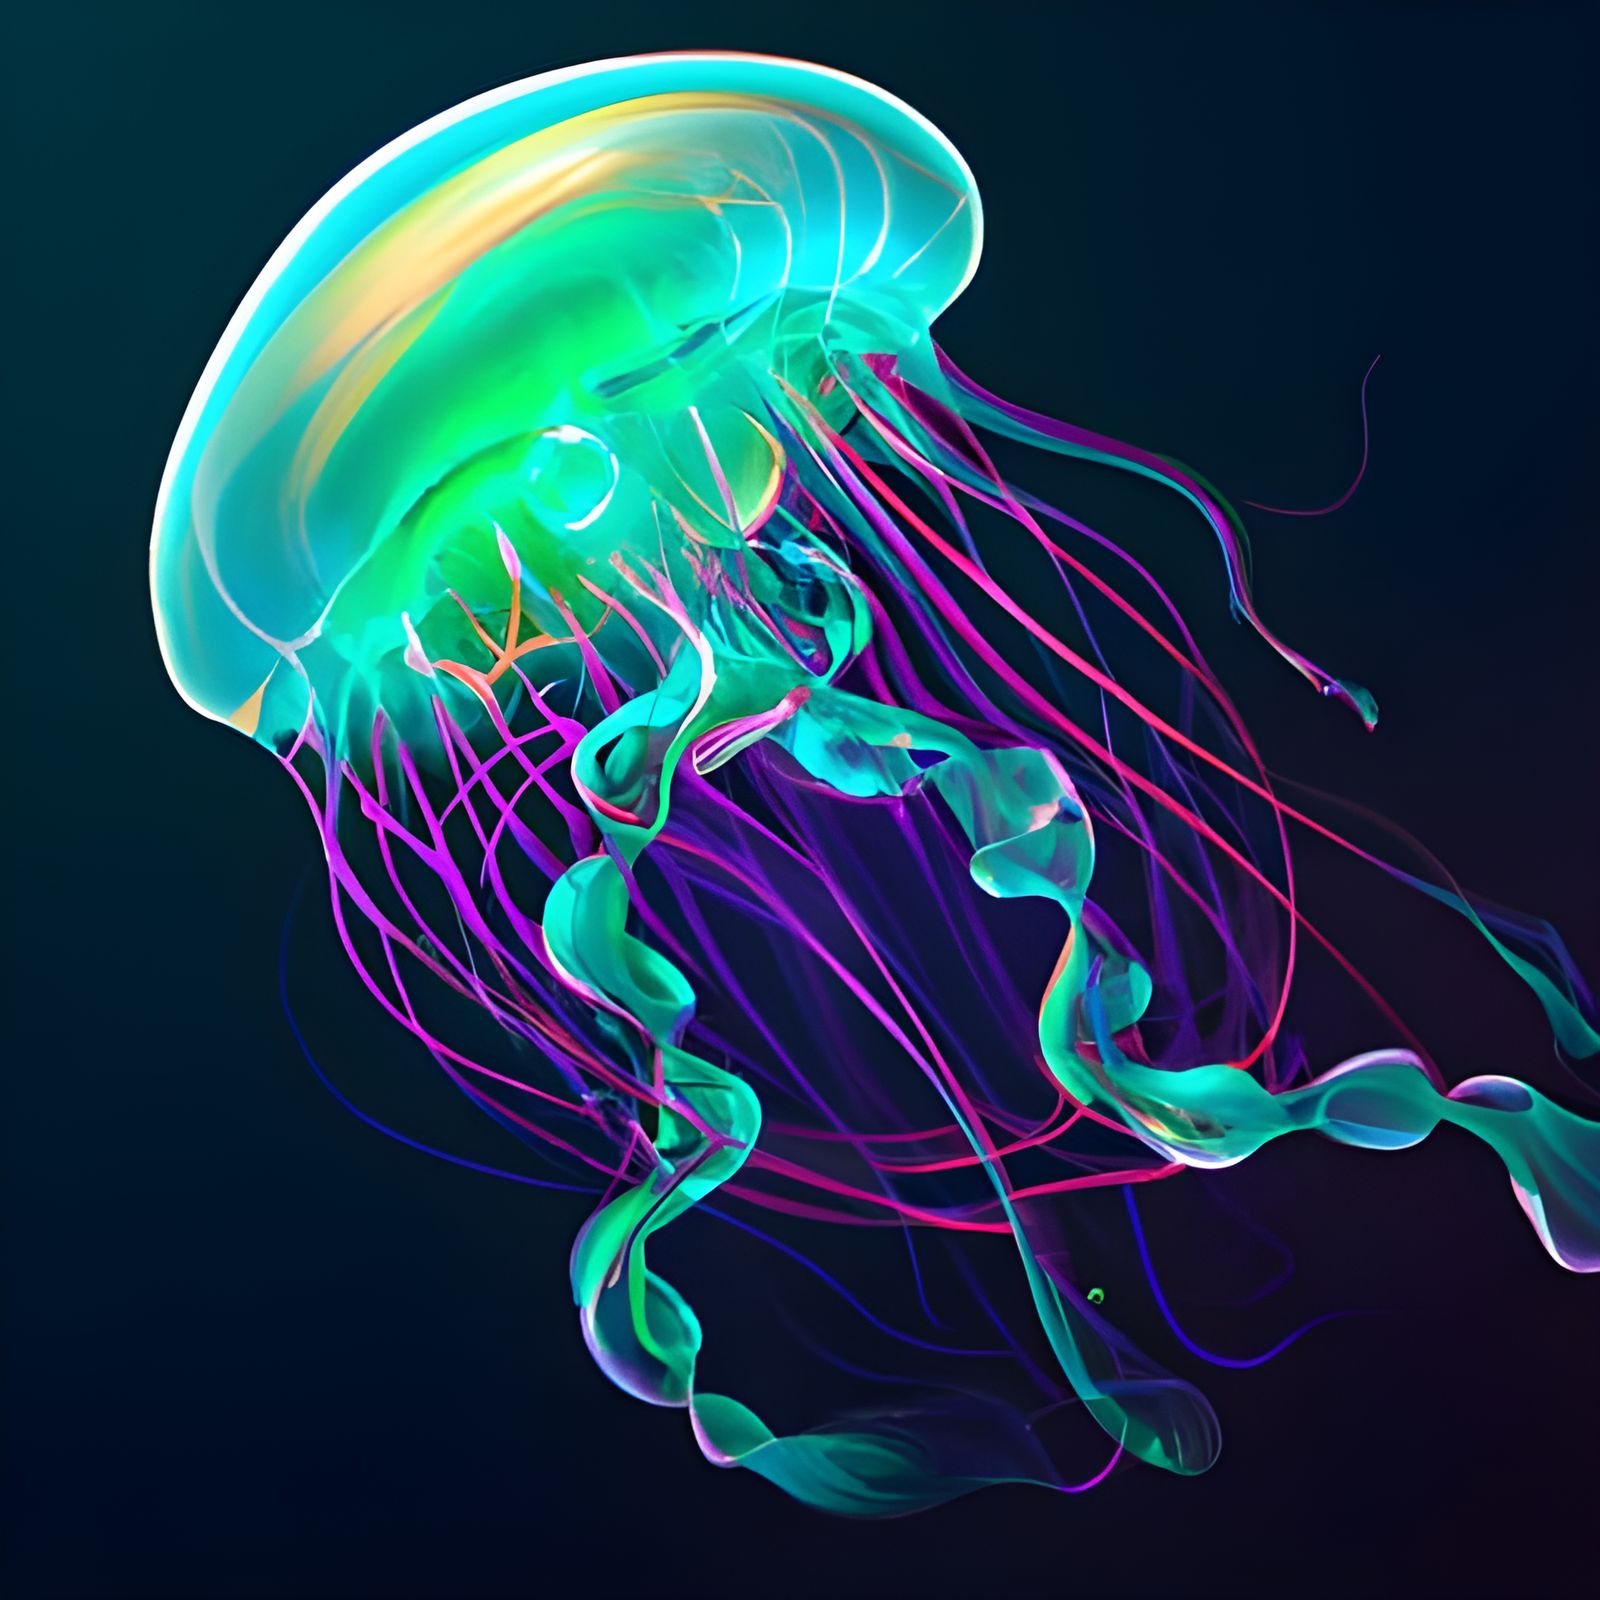 Glow in the Dark Jellyfish 